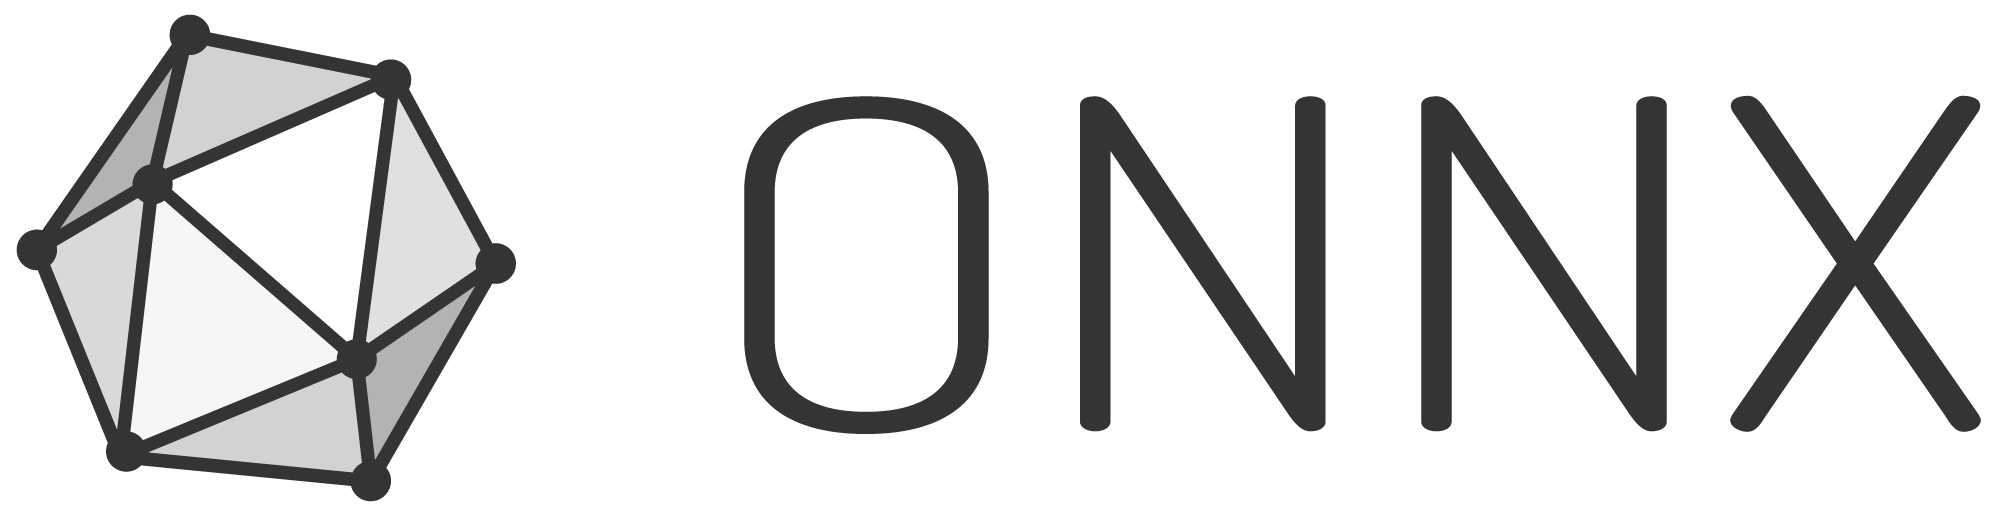 ONNX logo